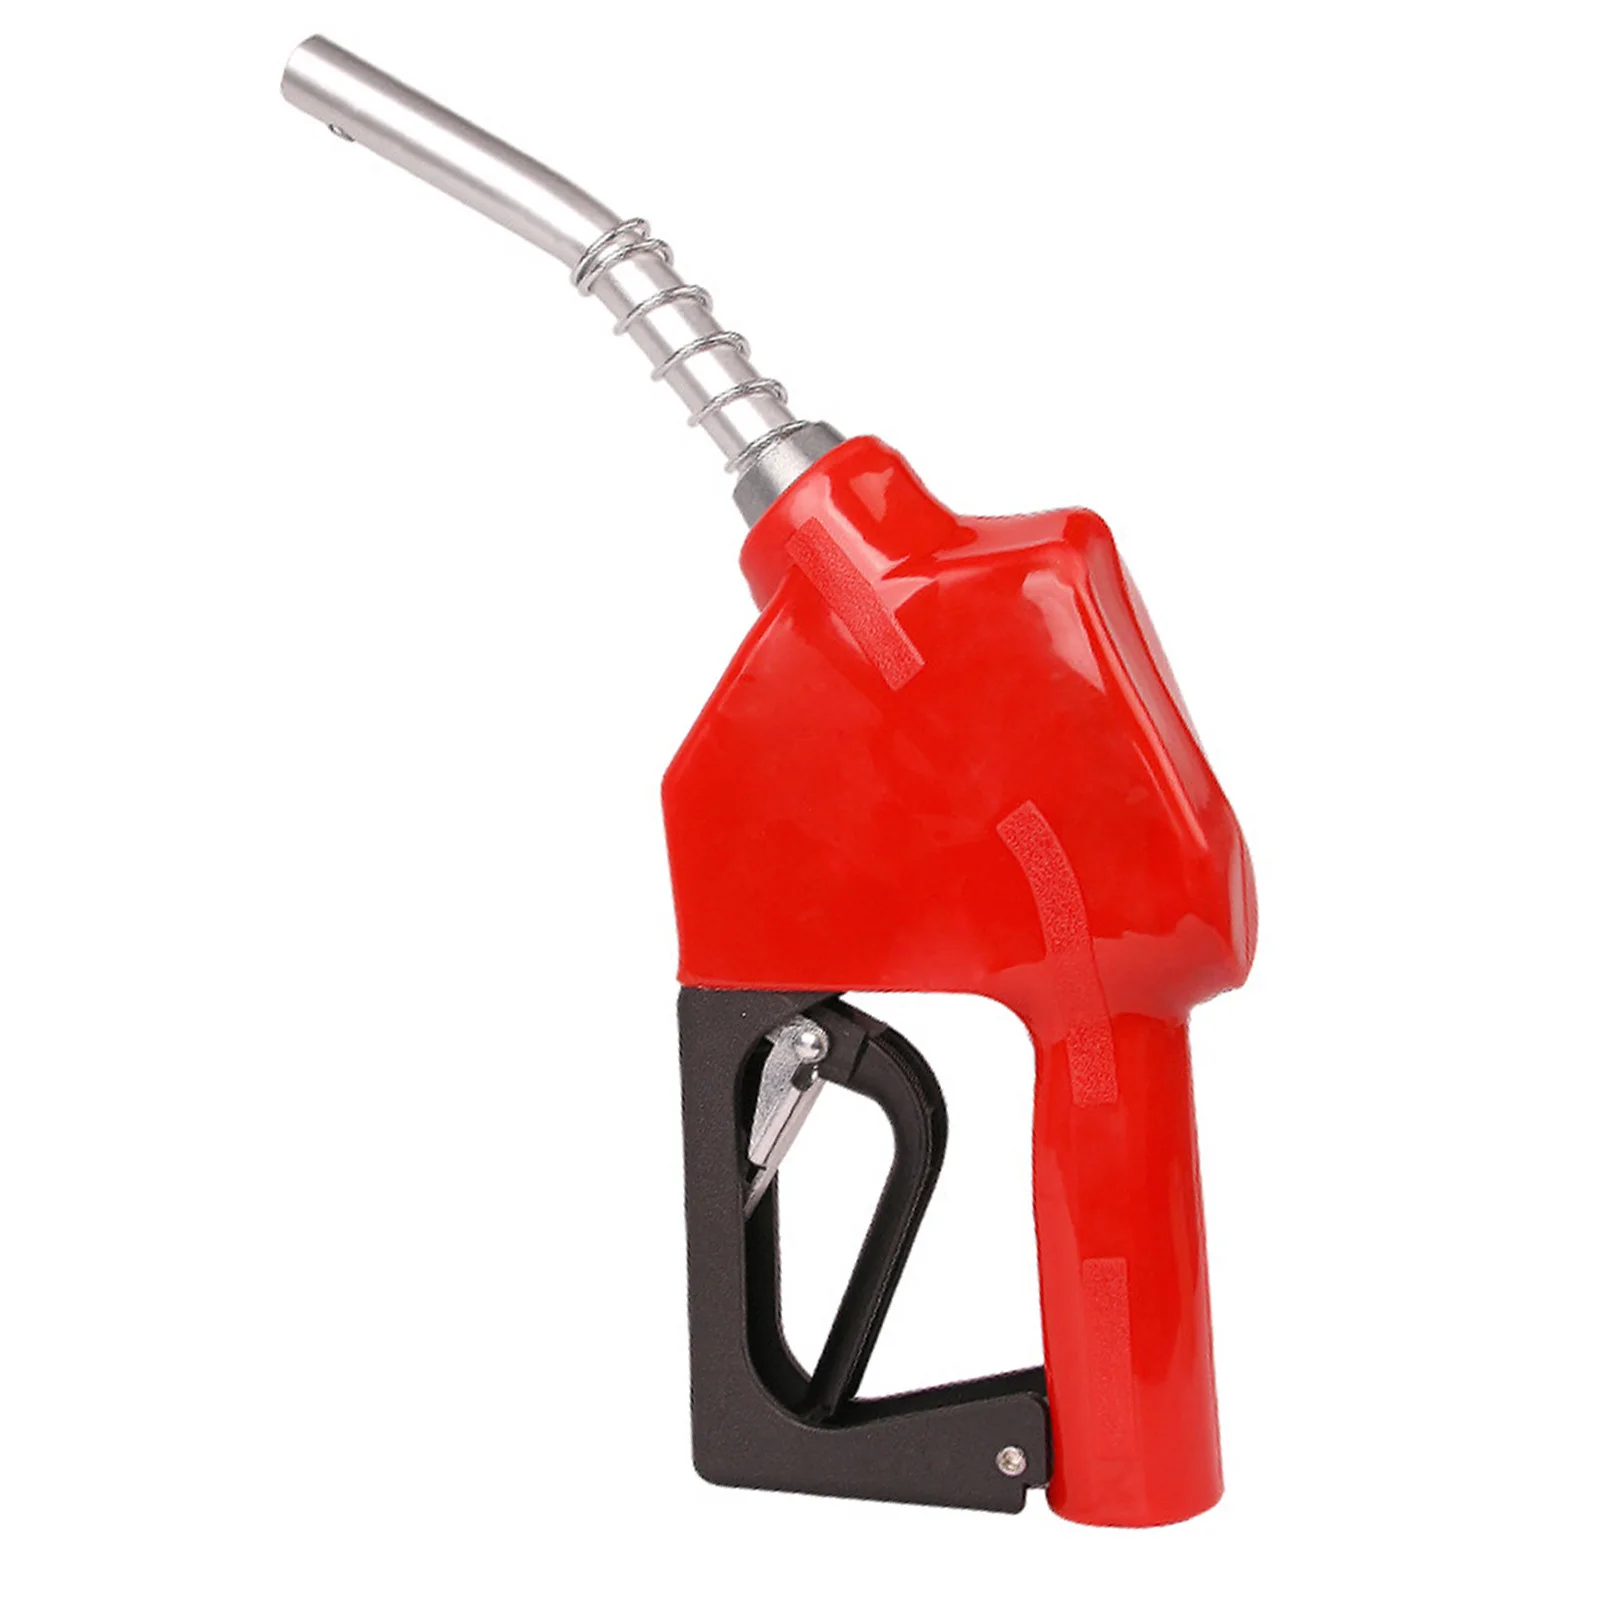 Automatic Fueling Nozzle Auto Shut Off Diesel Kerosene Refilling Fits 3/4" Hoses 